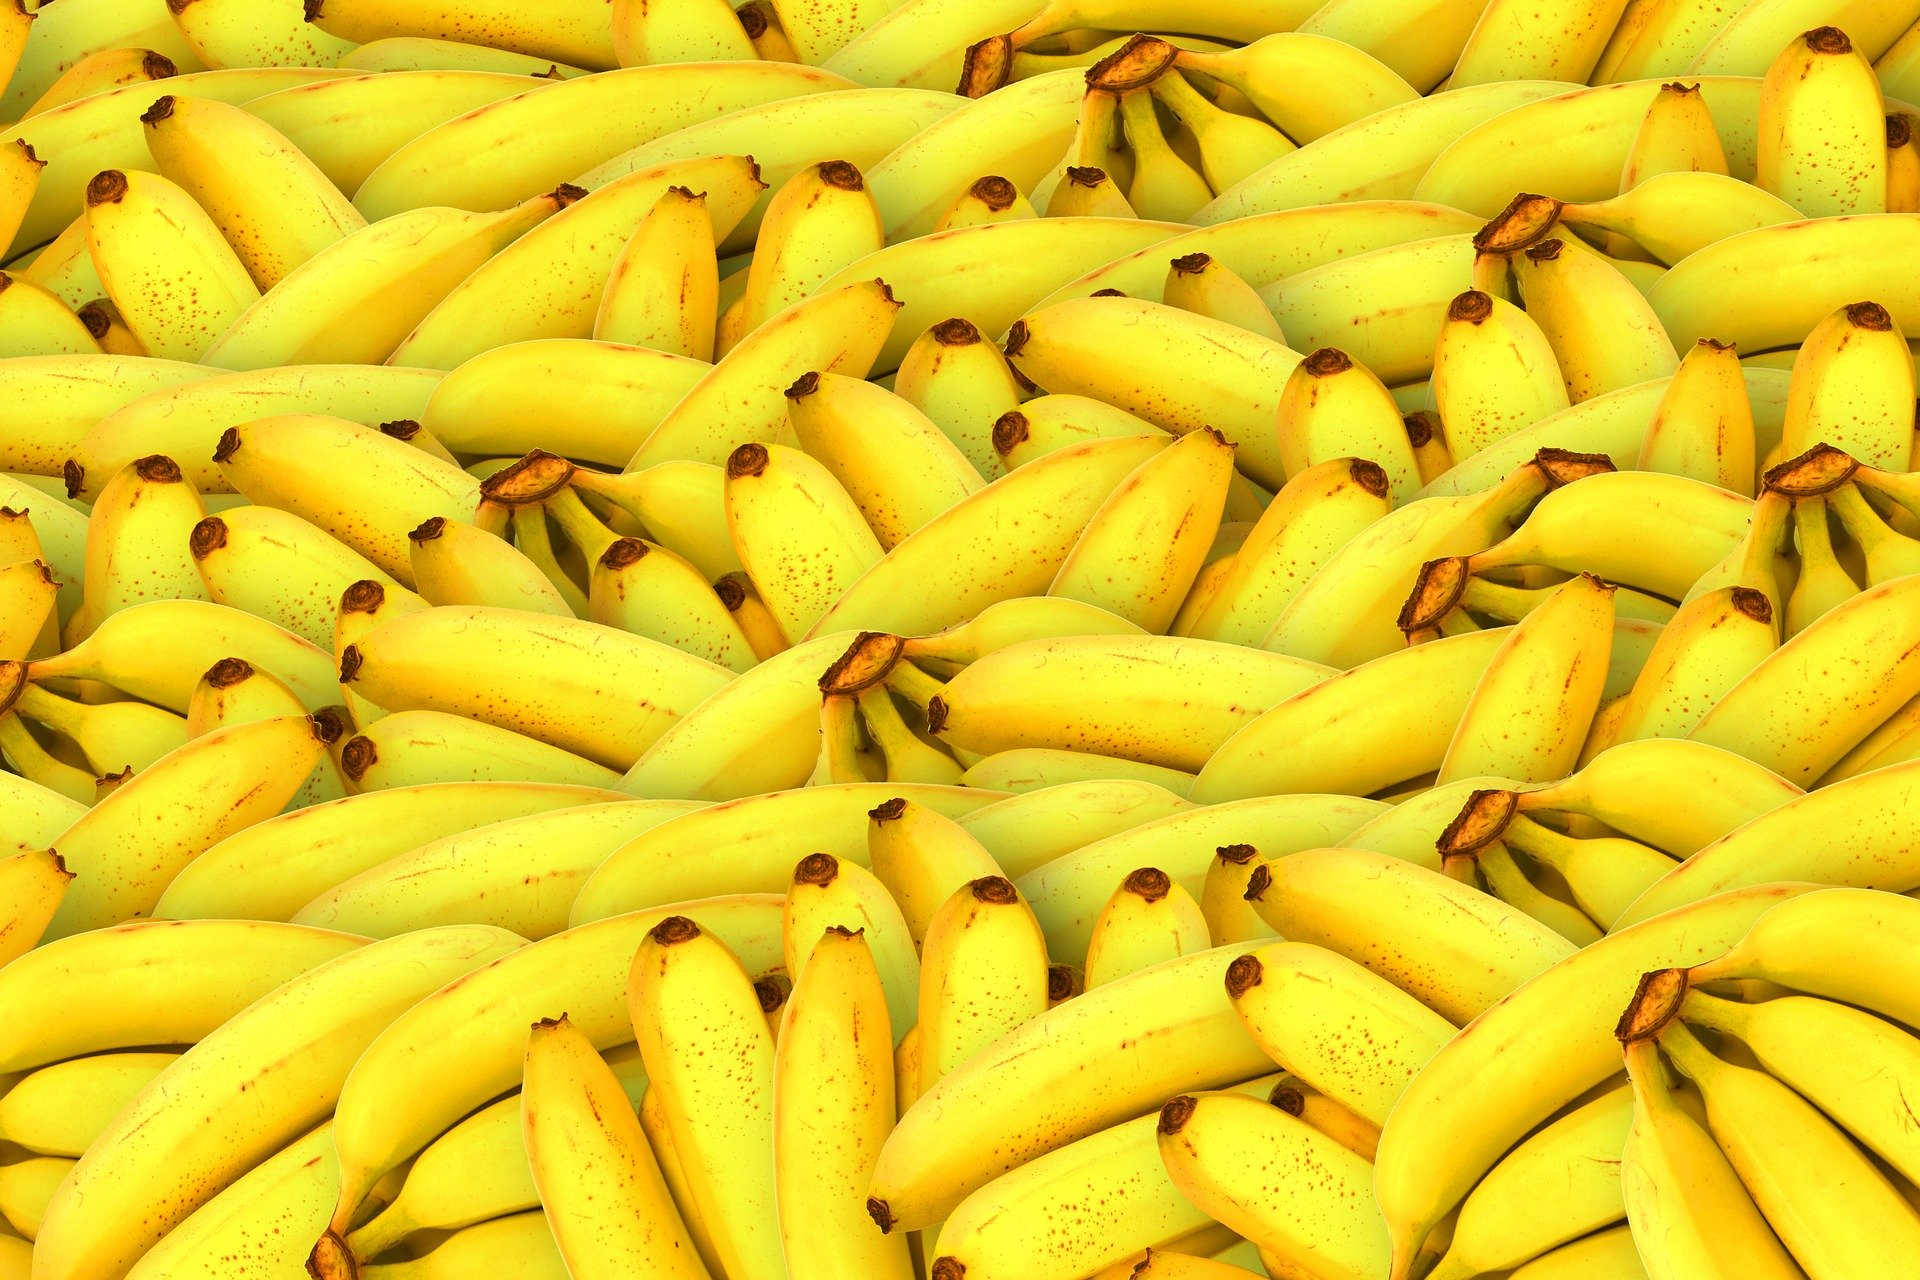 A huge pile of bananas